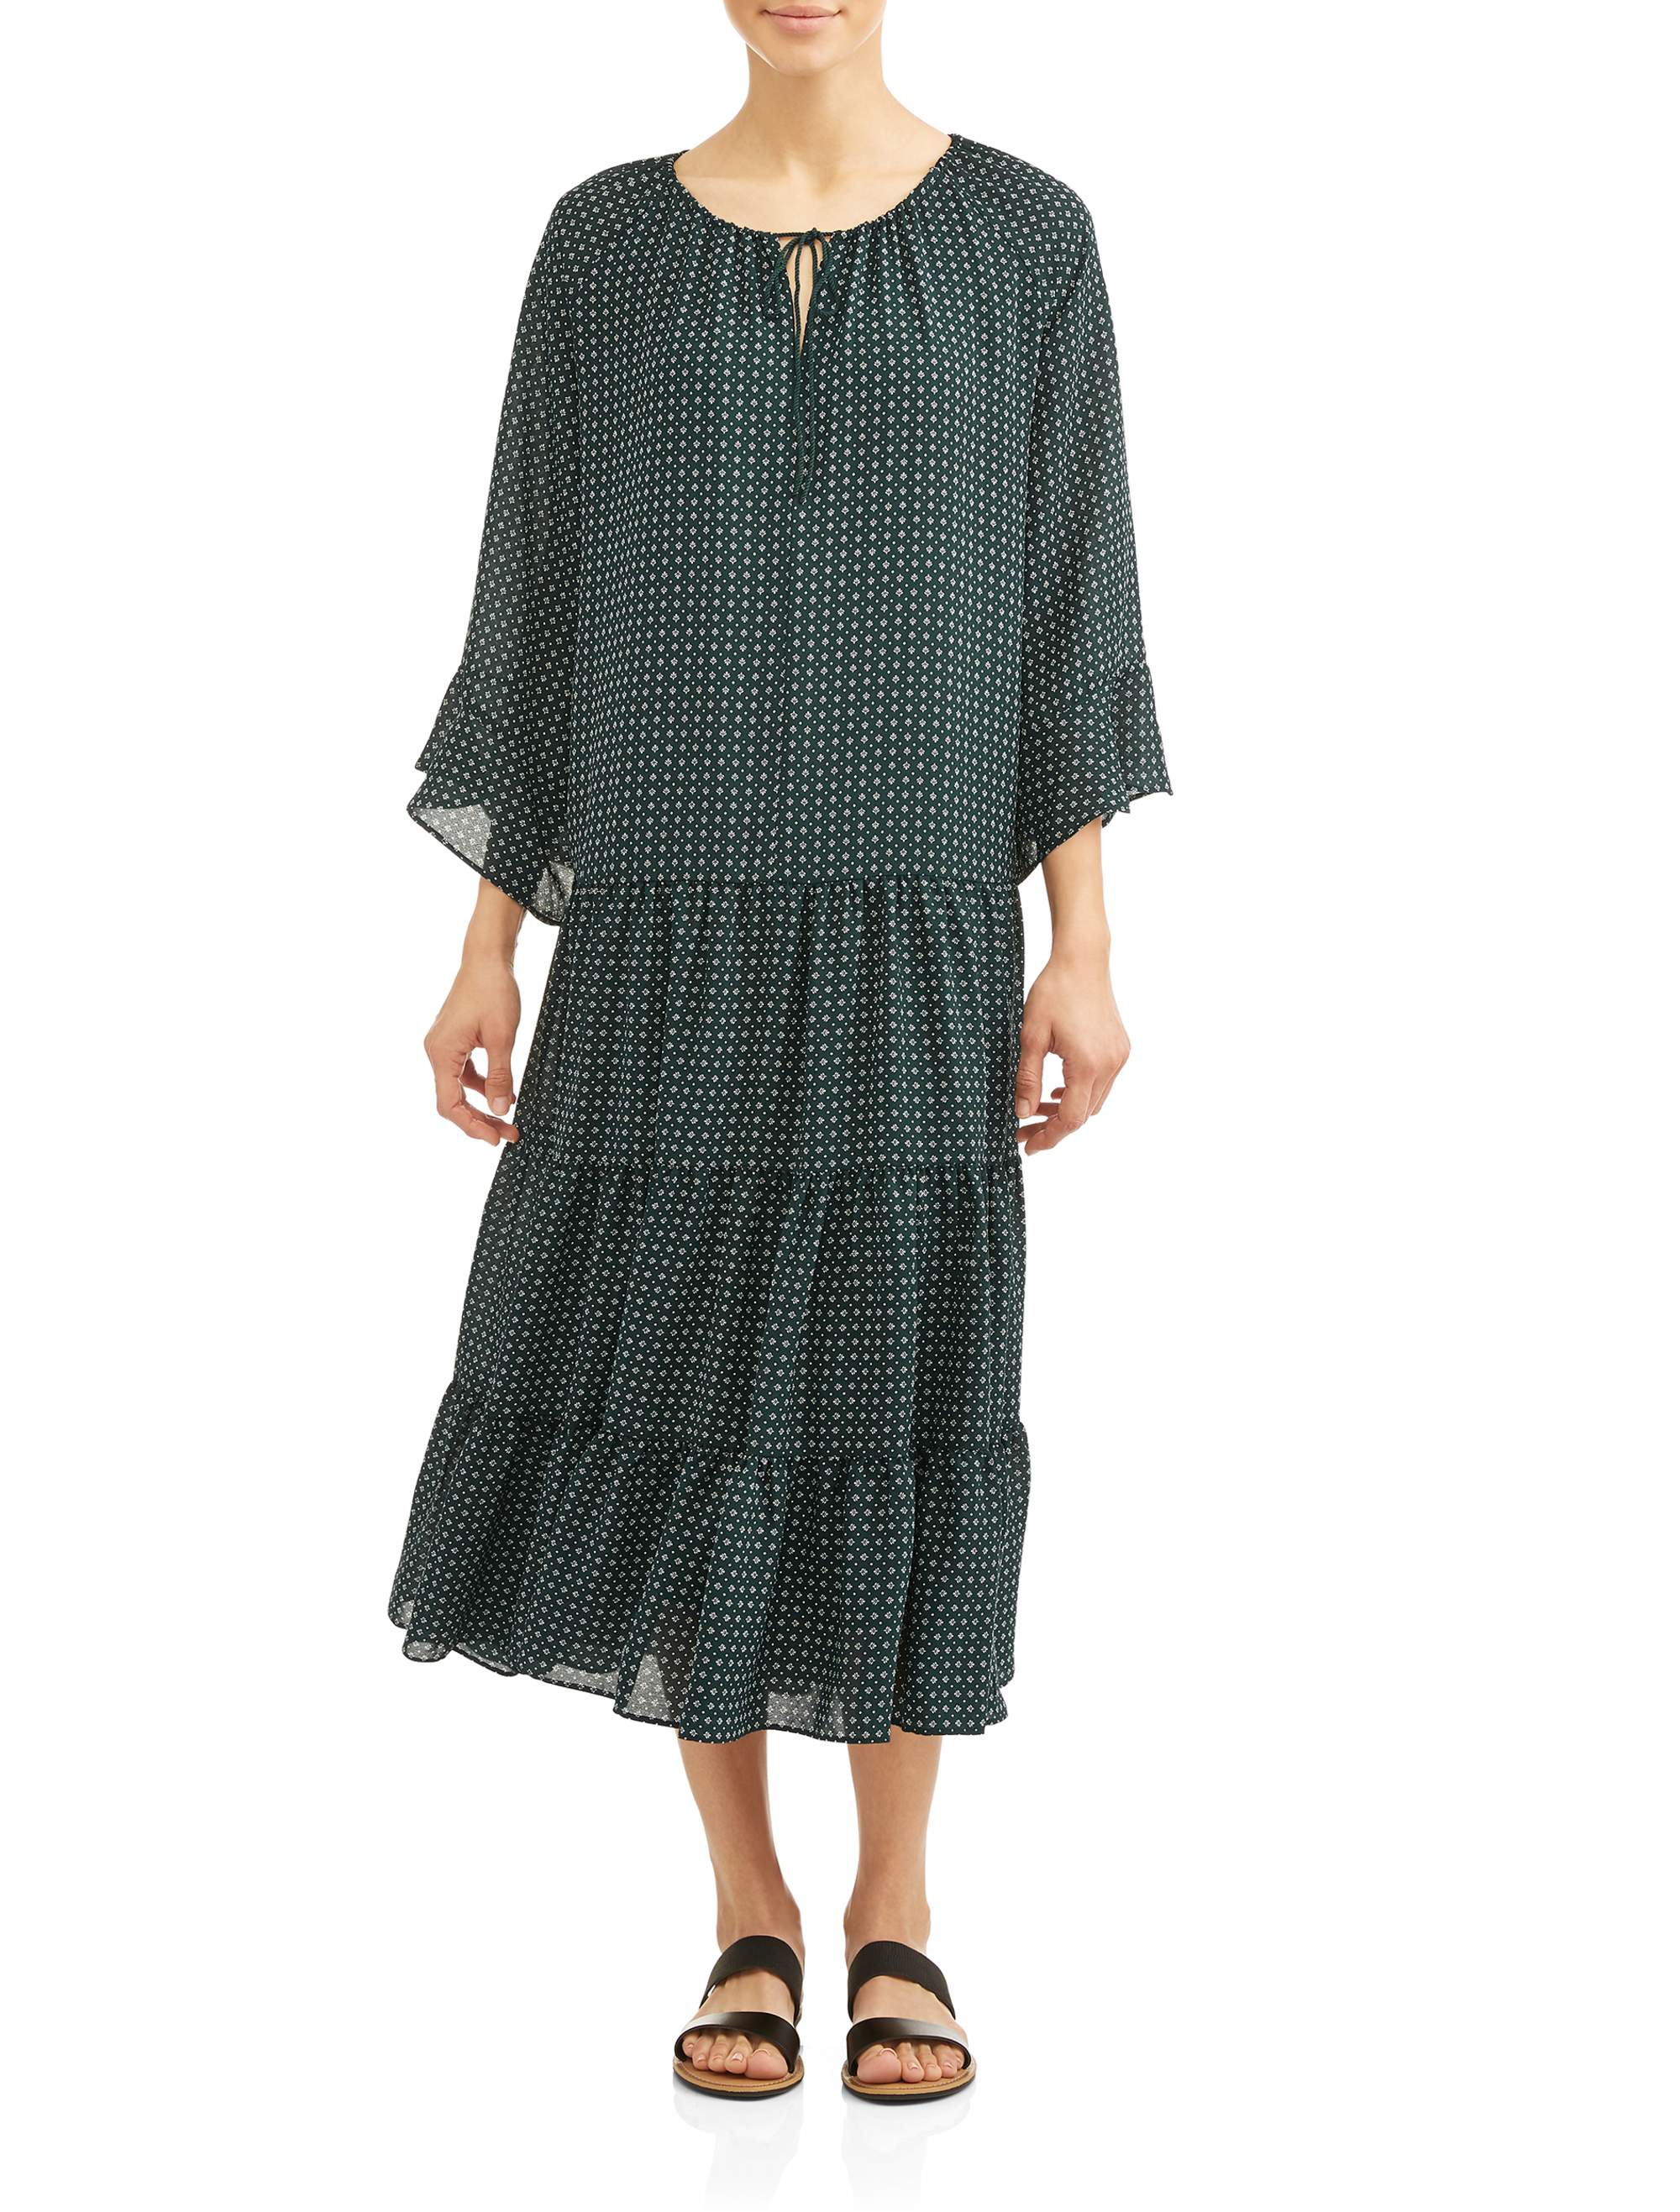 Women's Candice Tiered Ruffle Bell Cuff Dress - image 1 of 3